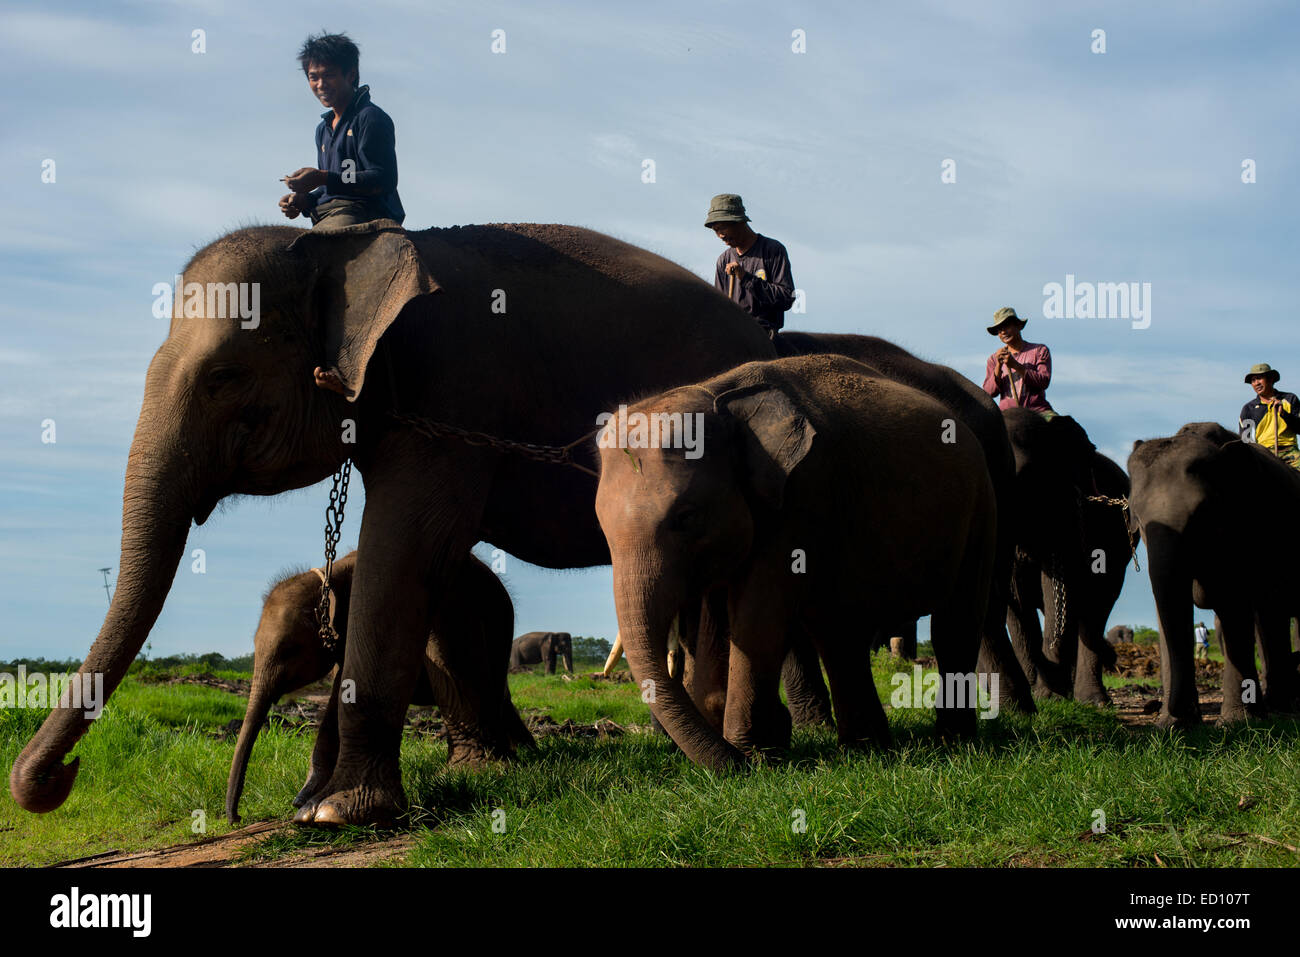 Elephant keepers take their elephants onto the feeding ground in Way Kambas National Park, Indonesia. Stock Photo